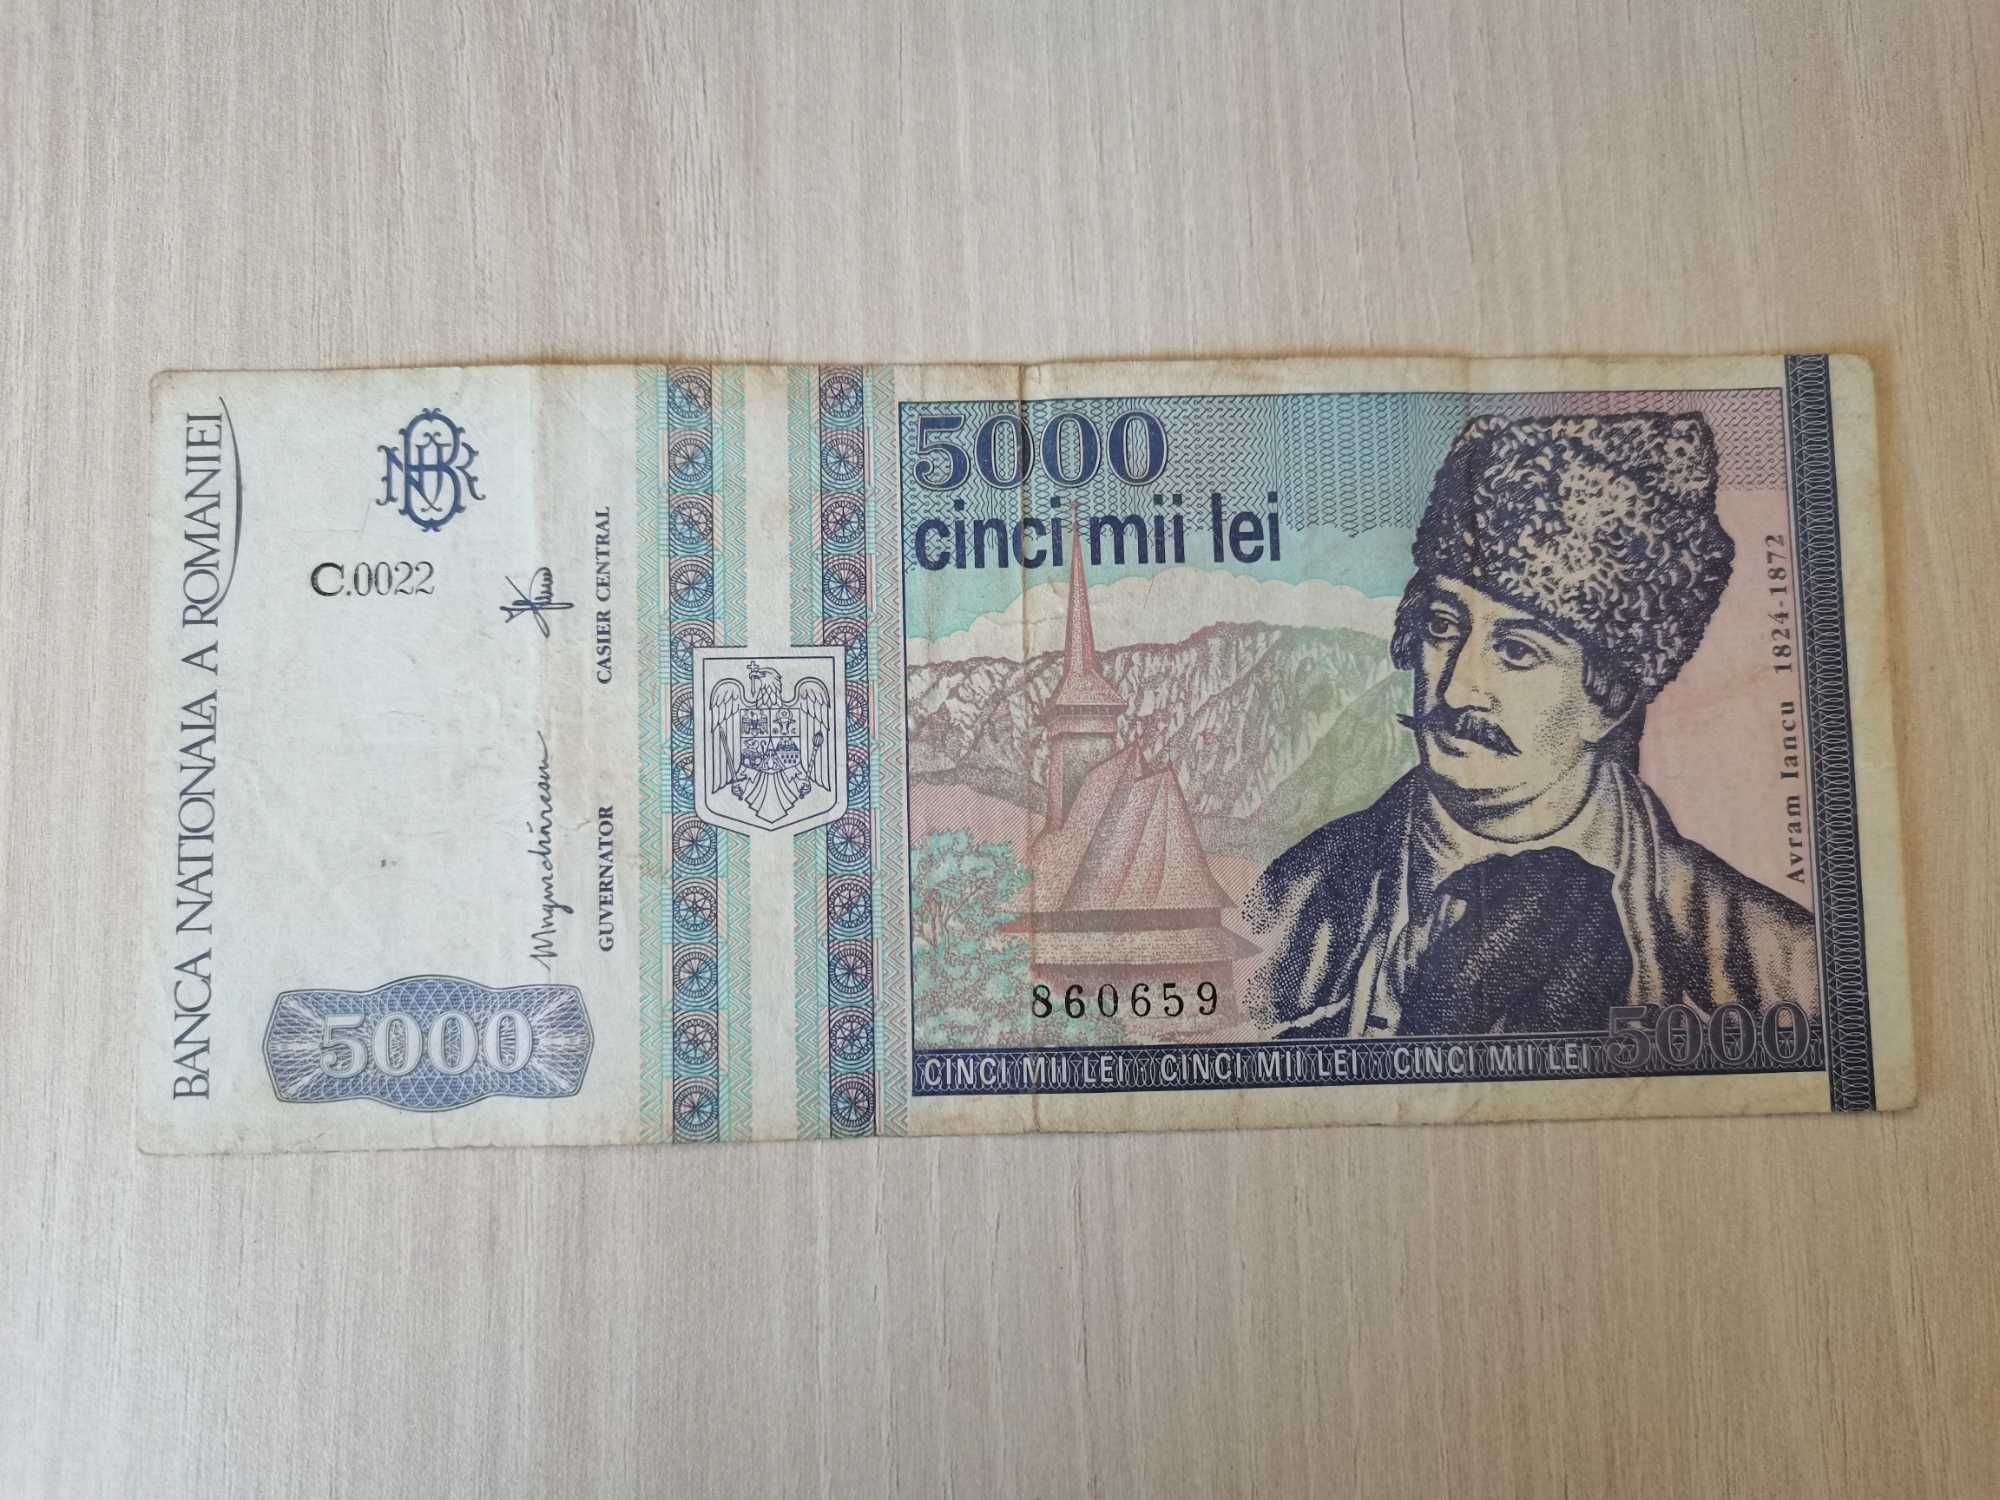 Bancnote vechi Ro - Bancnota de 5000 lei 1993